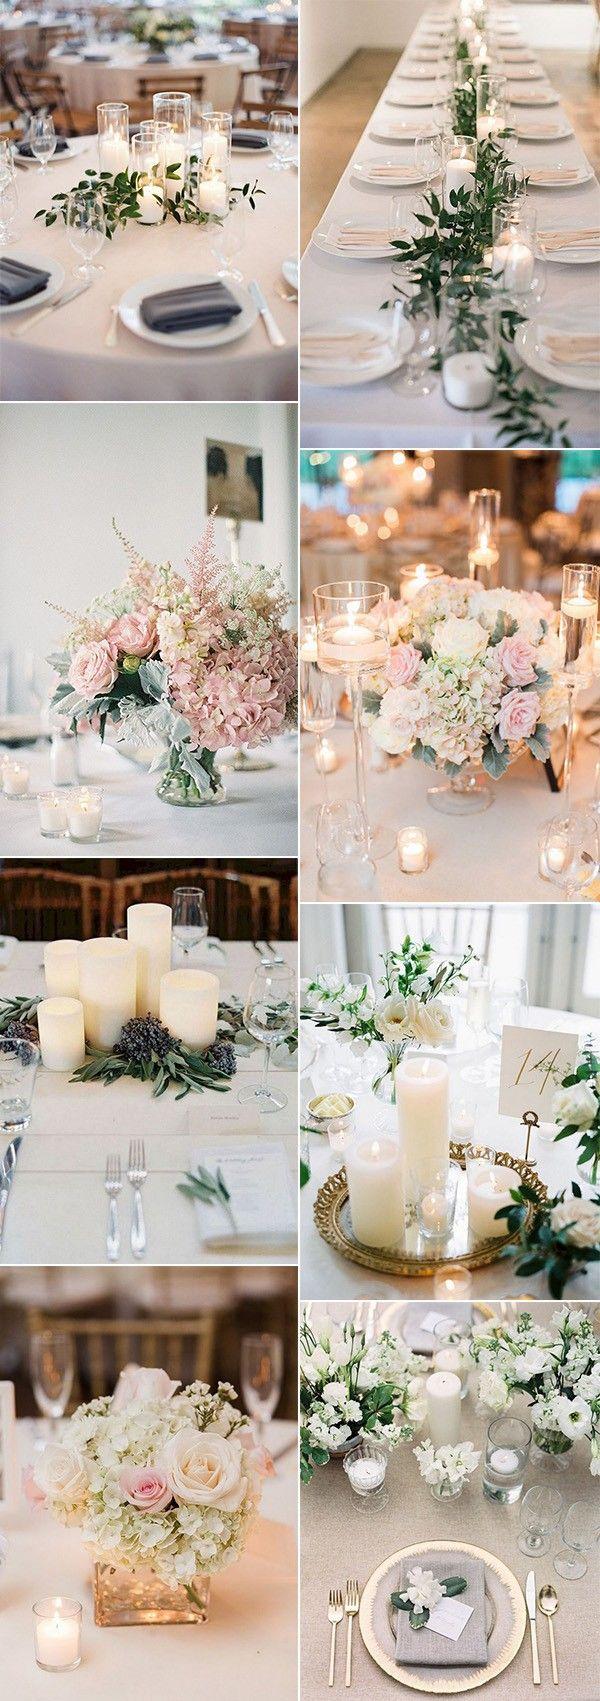 Hochzeit - 20 Elegant Wedding Centerpieces With Candles For 2018 Trends